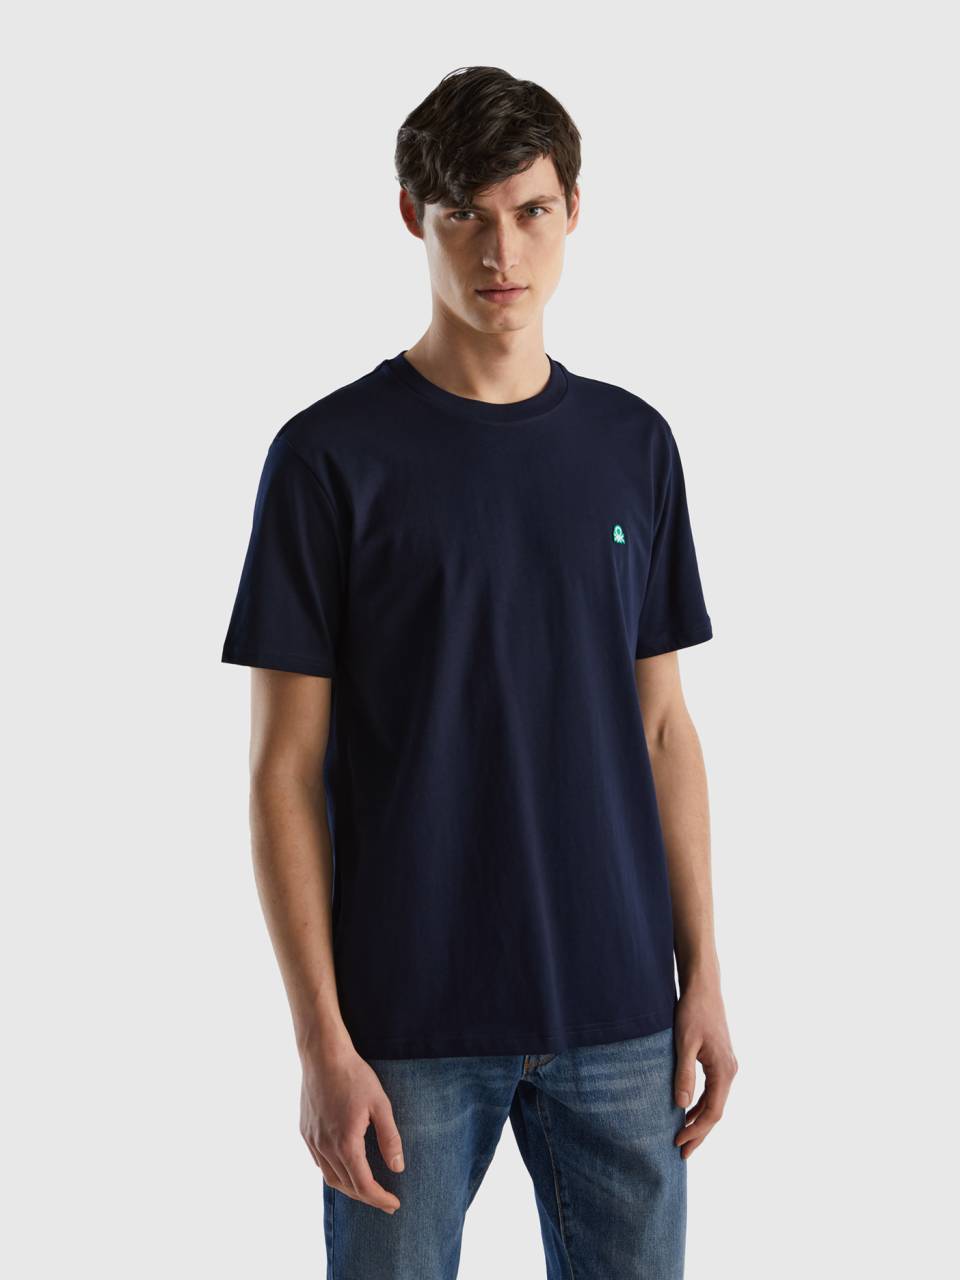 100% - basic Dark | cotton Blue t-shirt organic Benetton